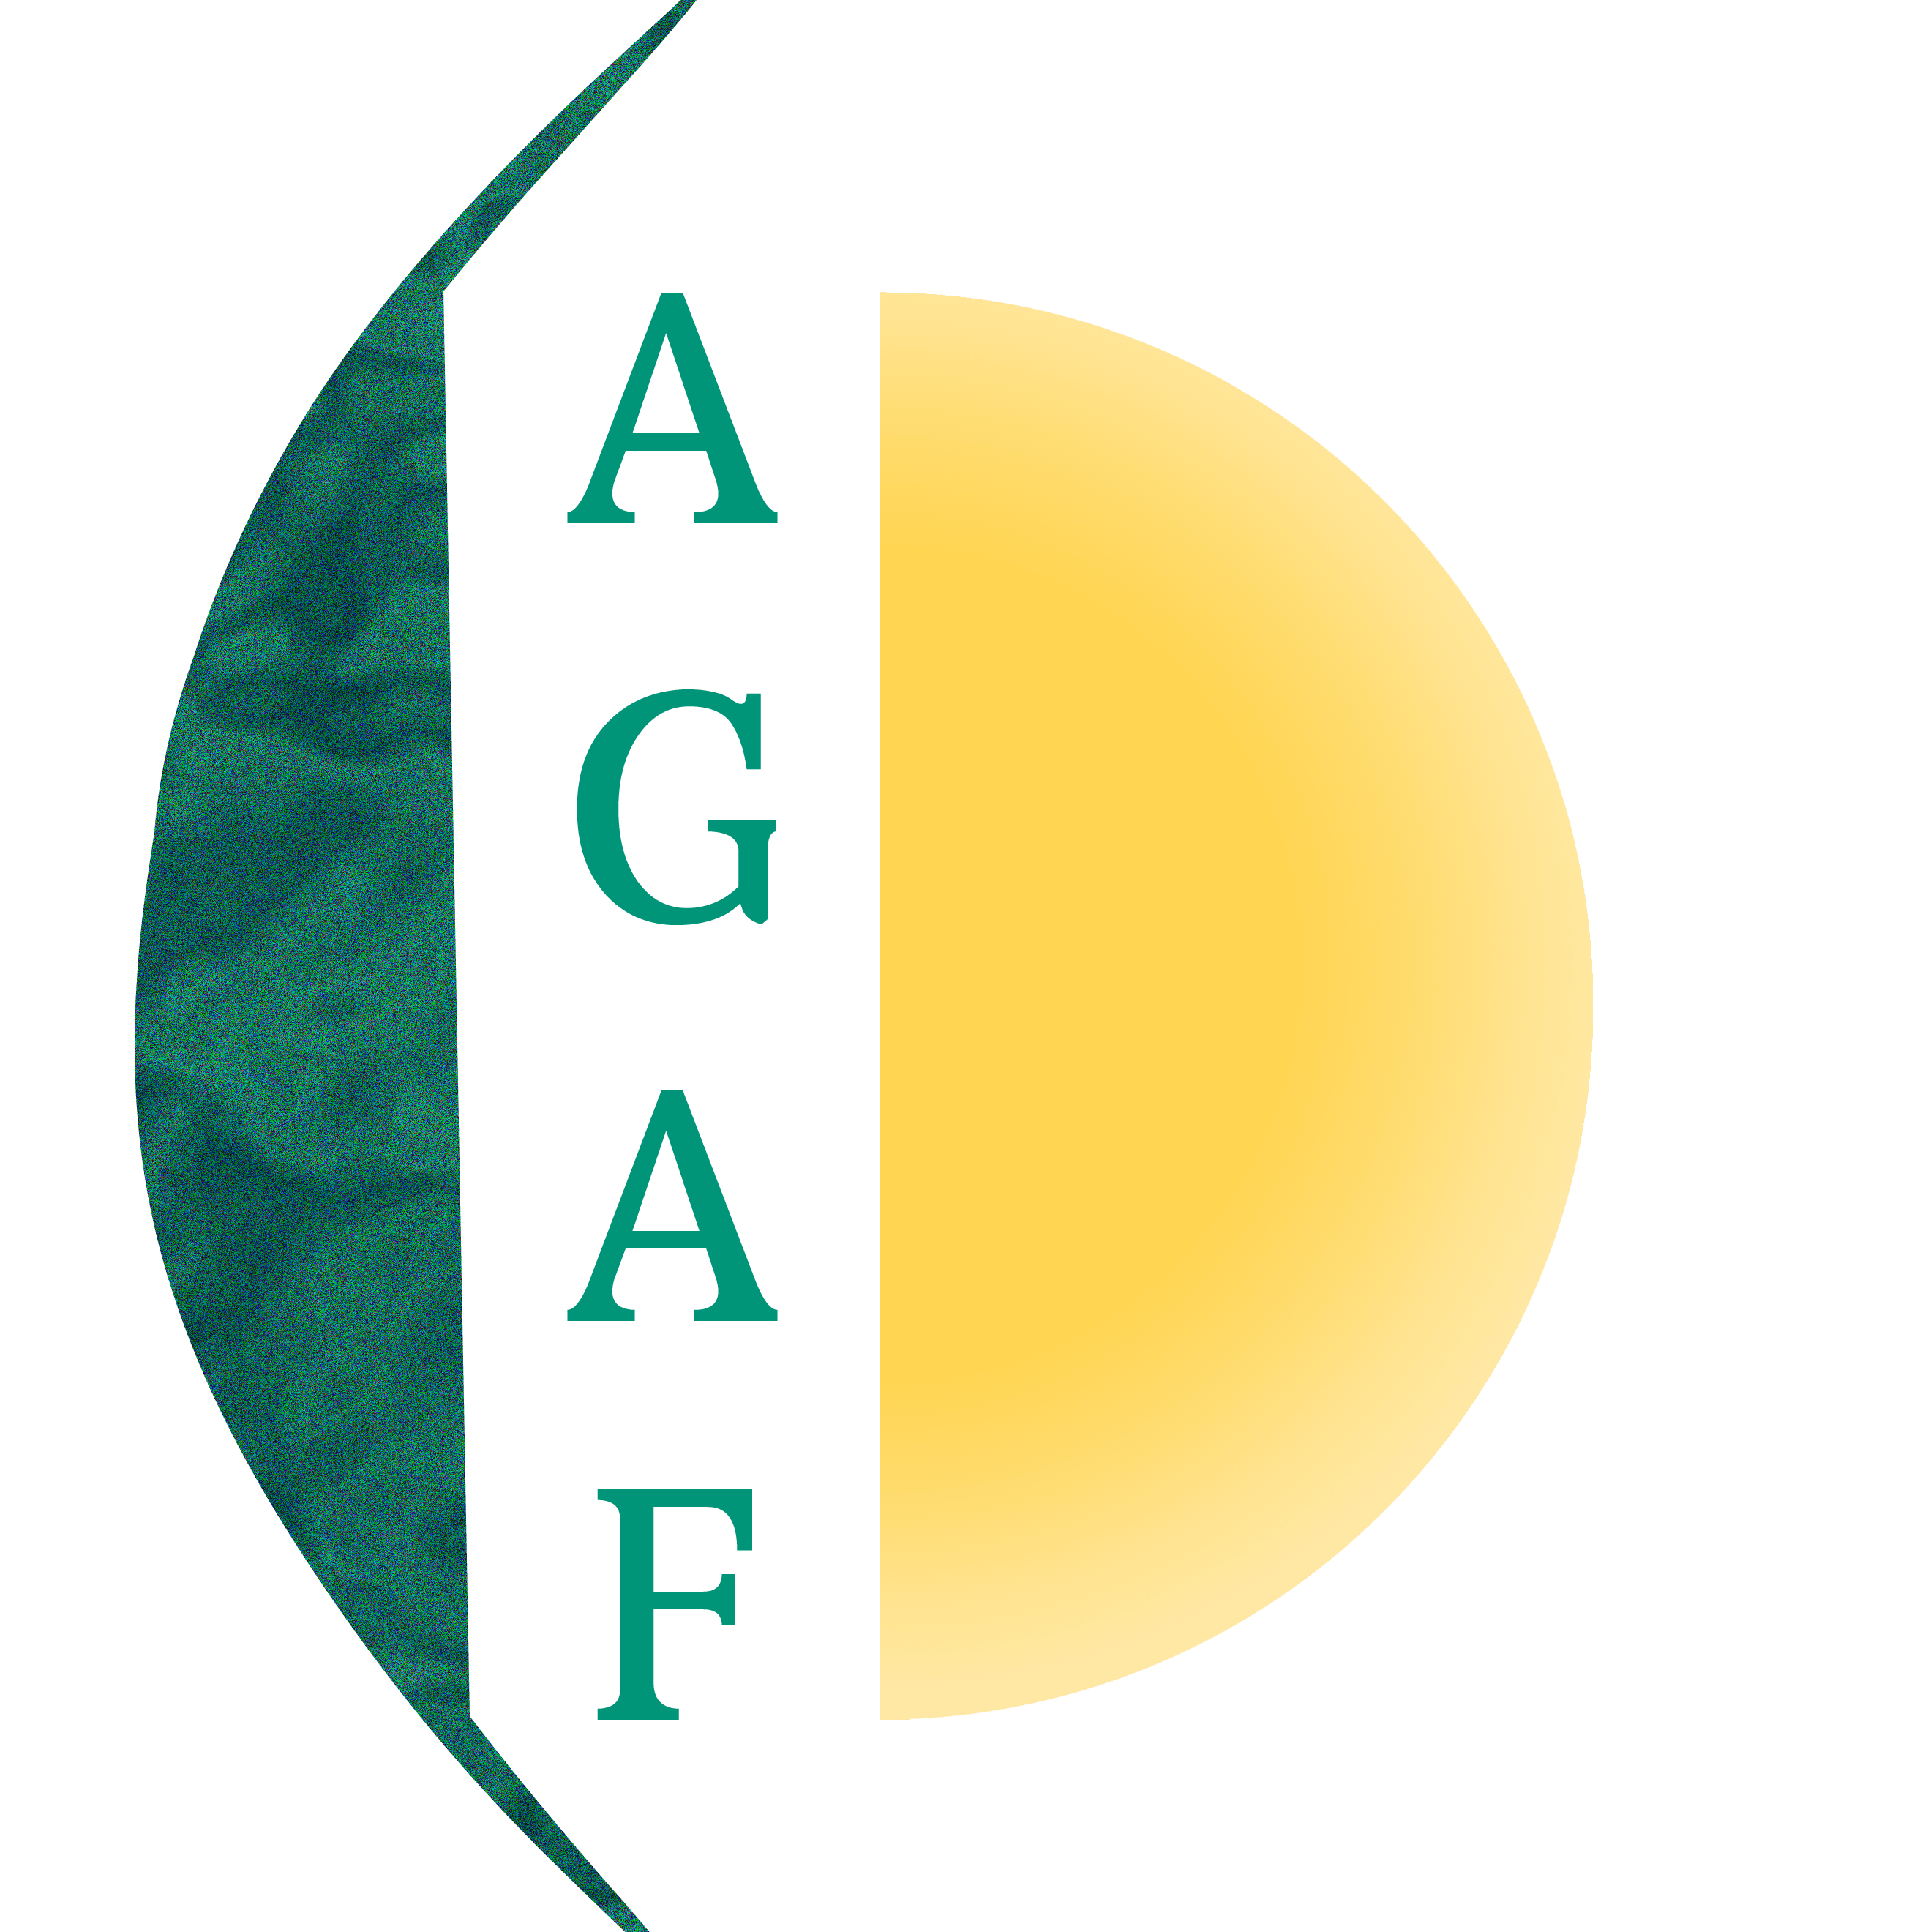 Asociación de glaucoma para afectados y familiares Profile, news, ratings and communication